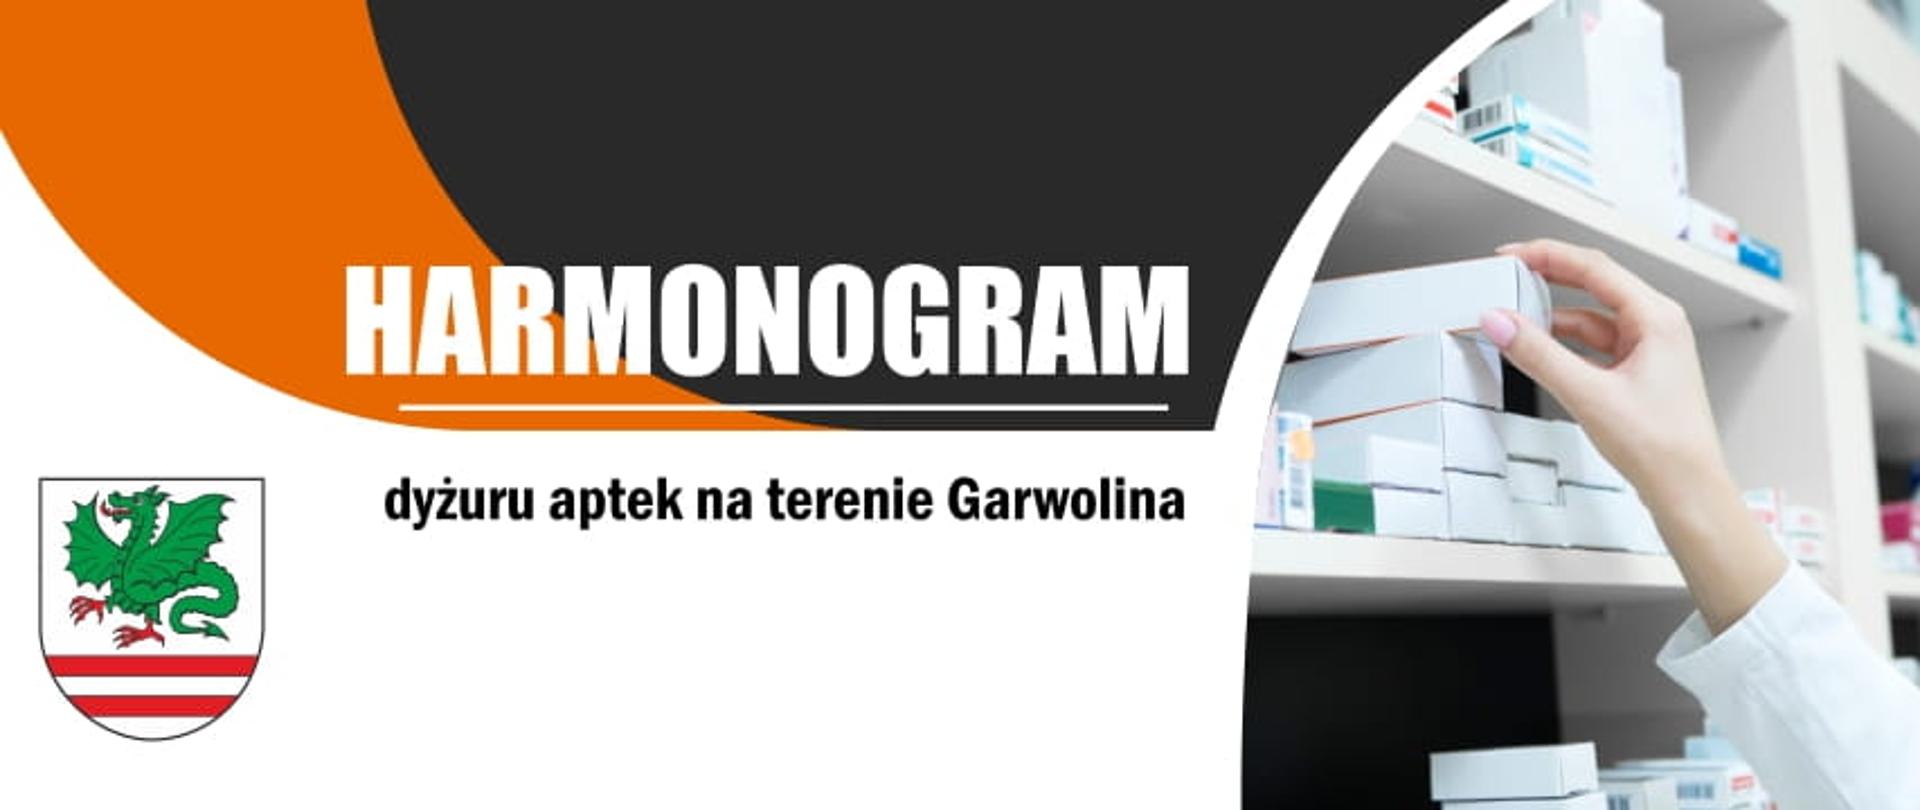 Harmonogram dyżuru aptek na terenie Garwolina - informacja